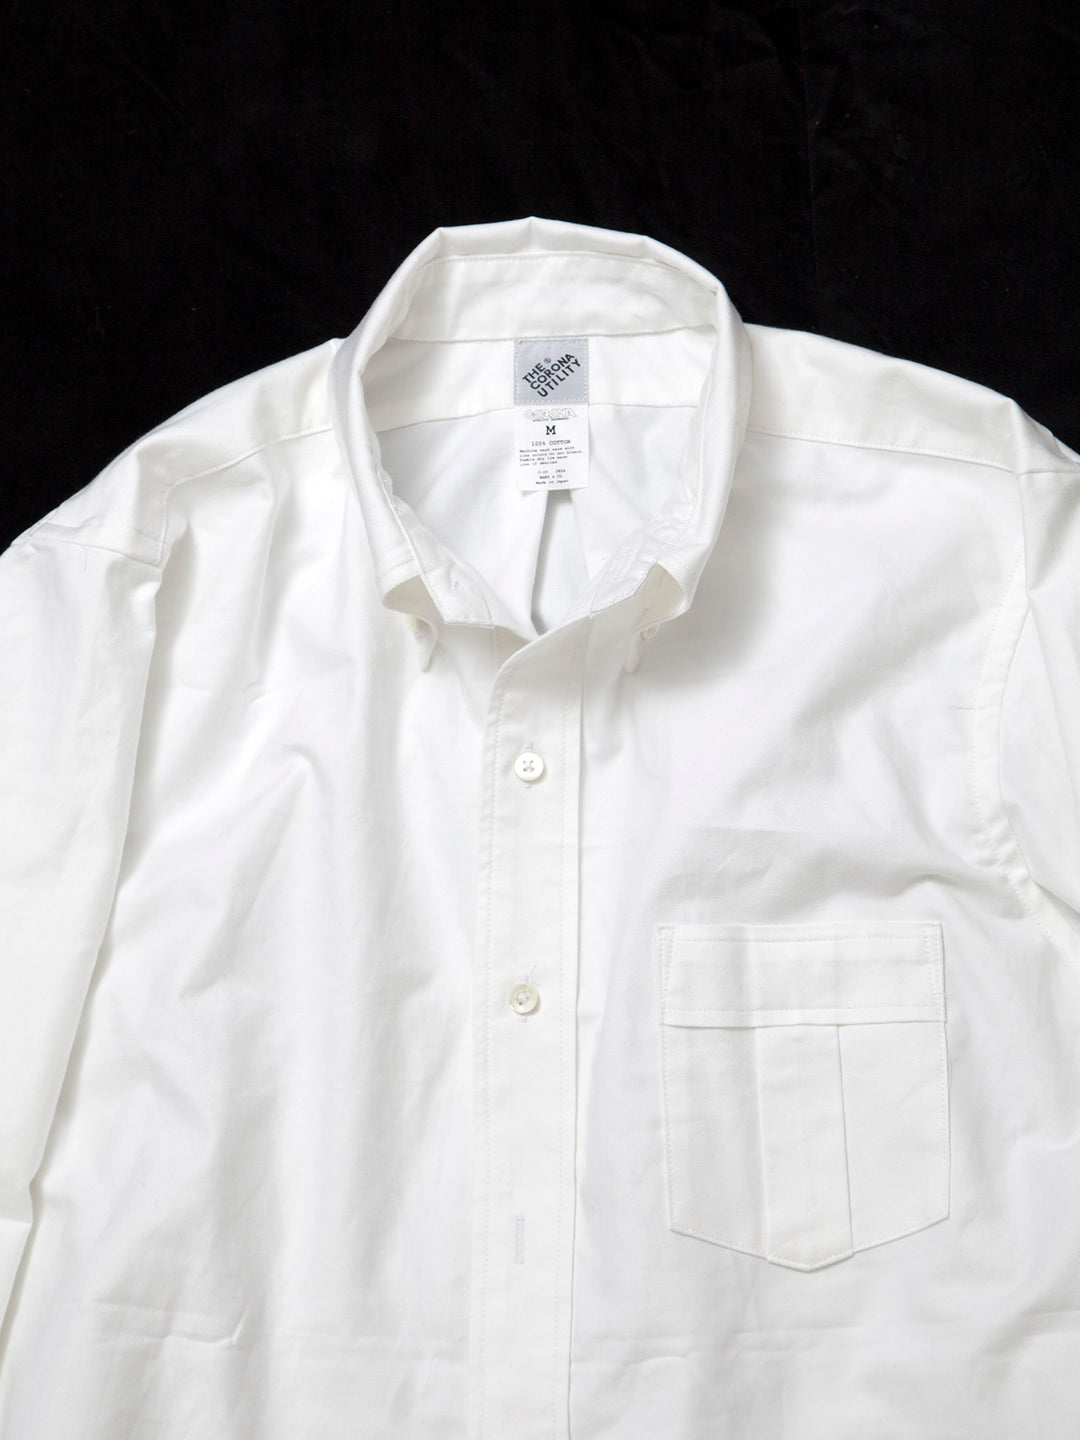 THE CORONA UTILITY - CS005・White Collar Work Shirt / American Sea Island Cotton - White